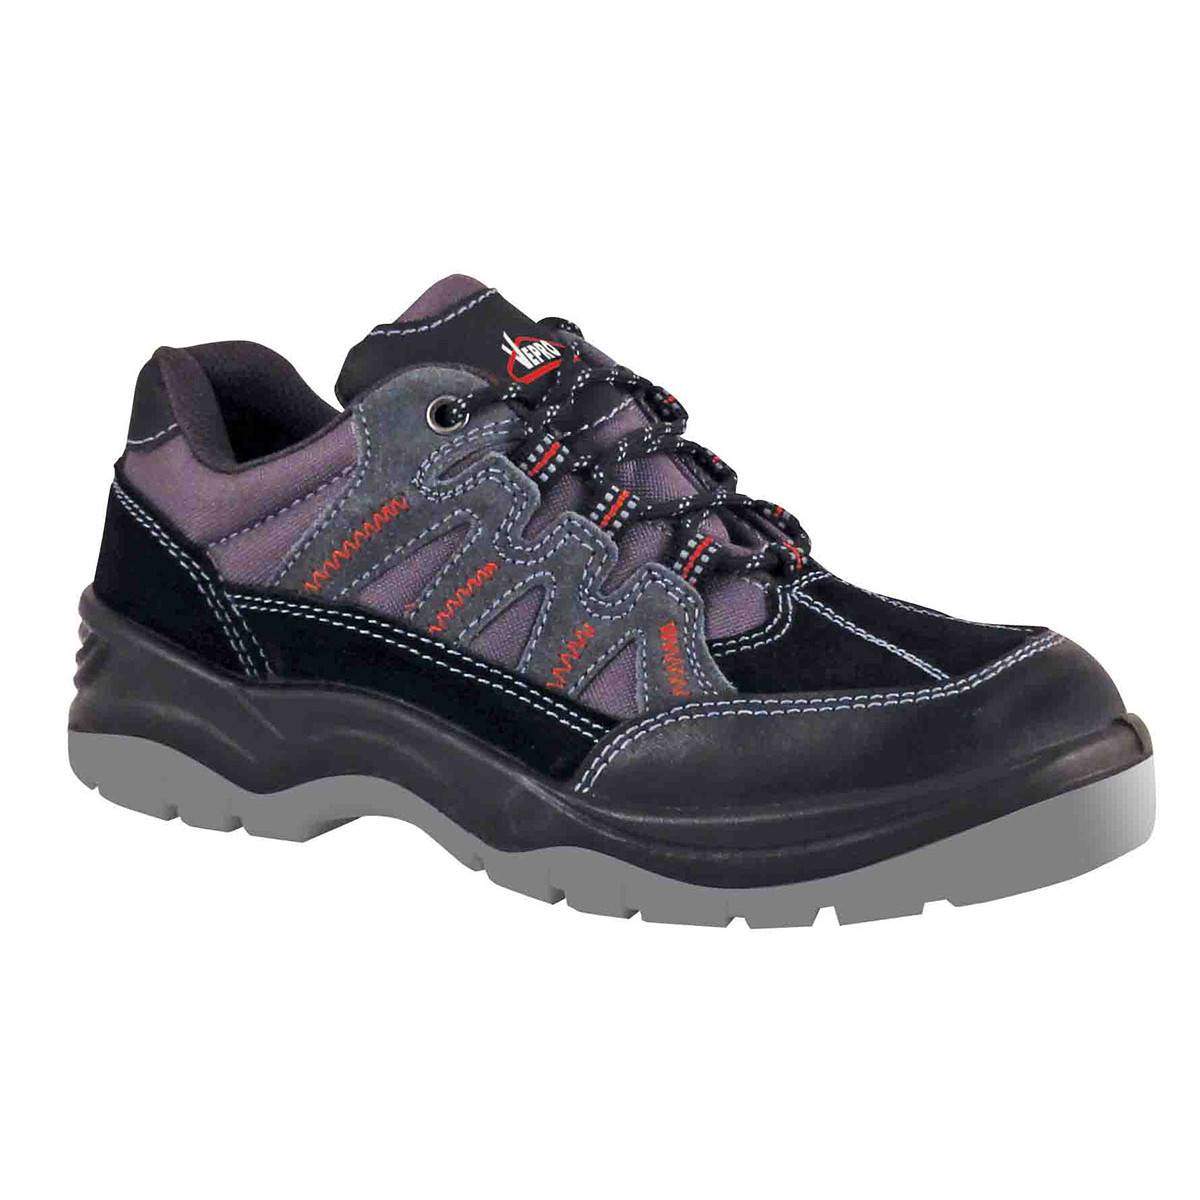 SPA safety shoes size 41, grey-black